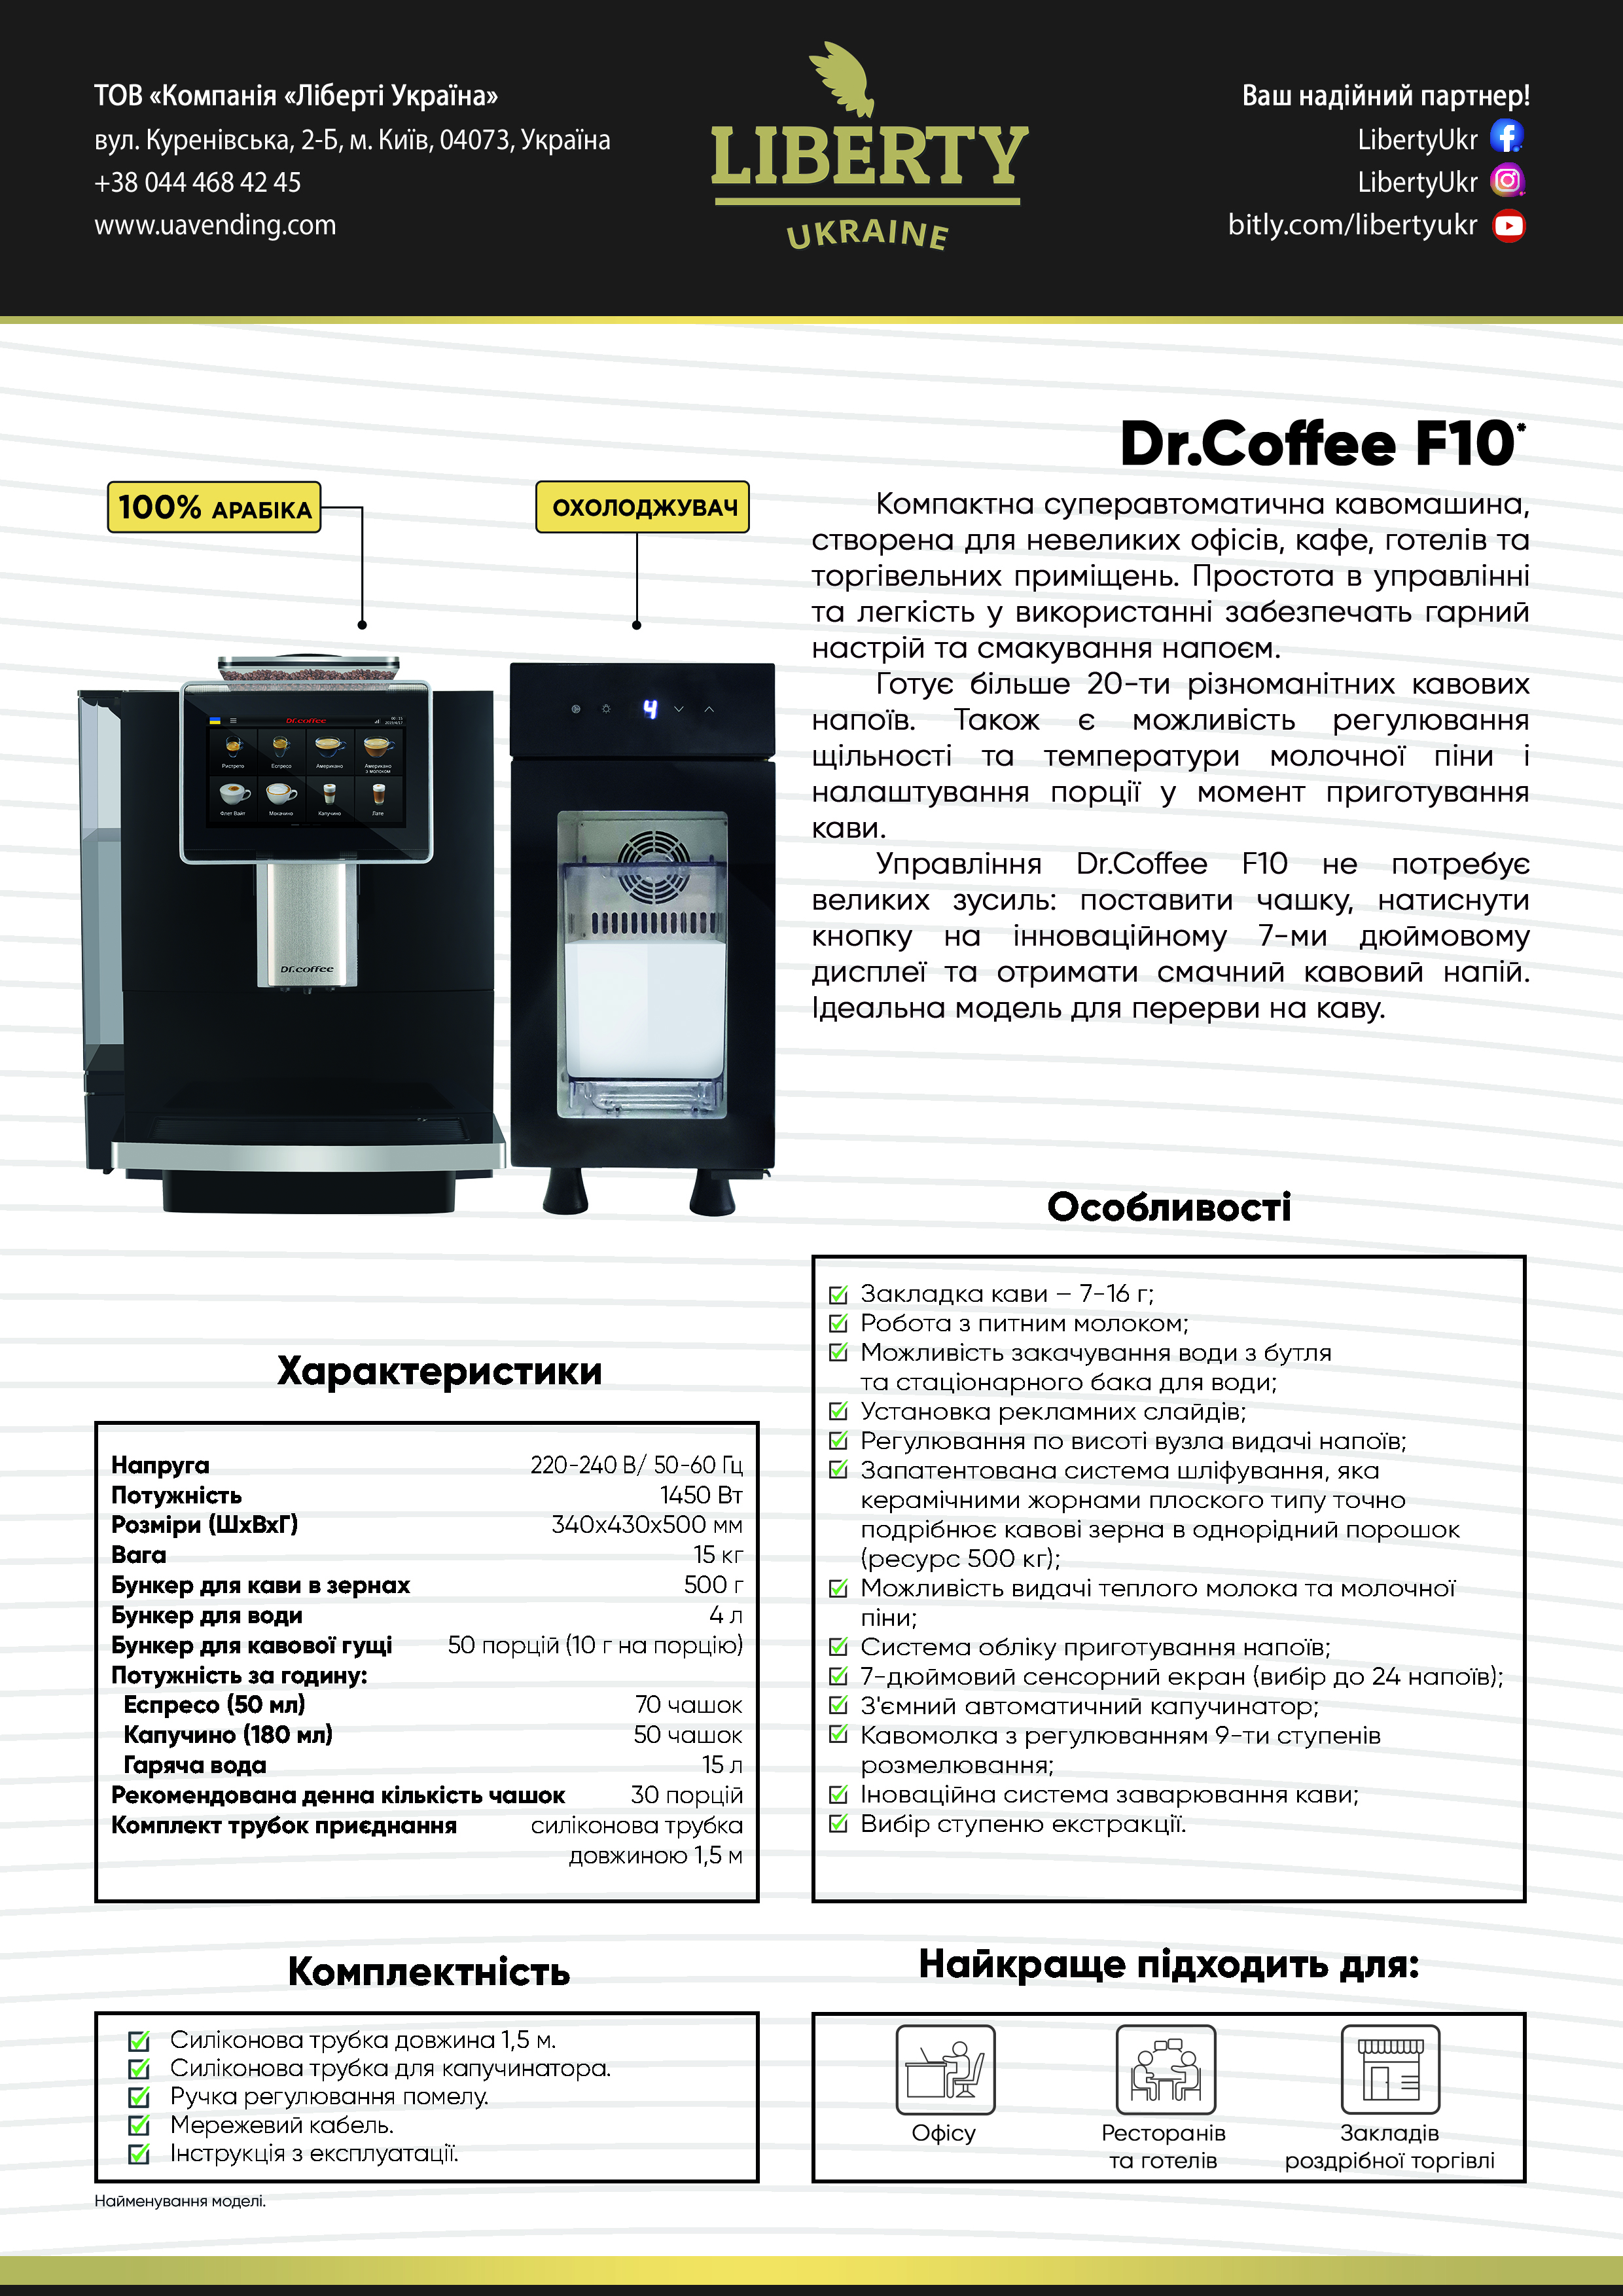 Dr. Coffee_F10